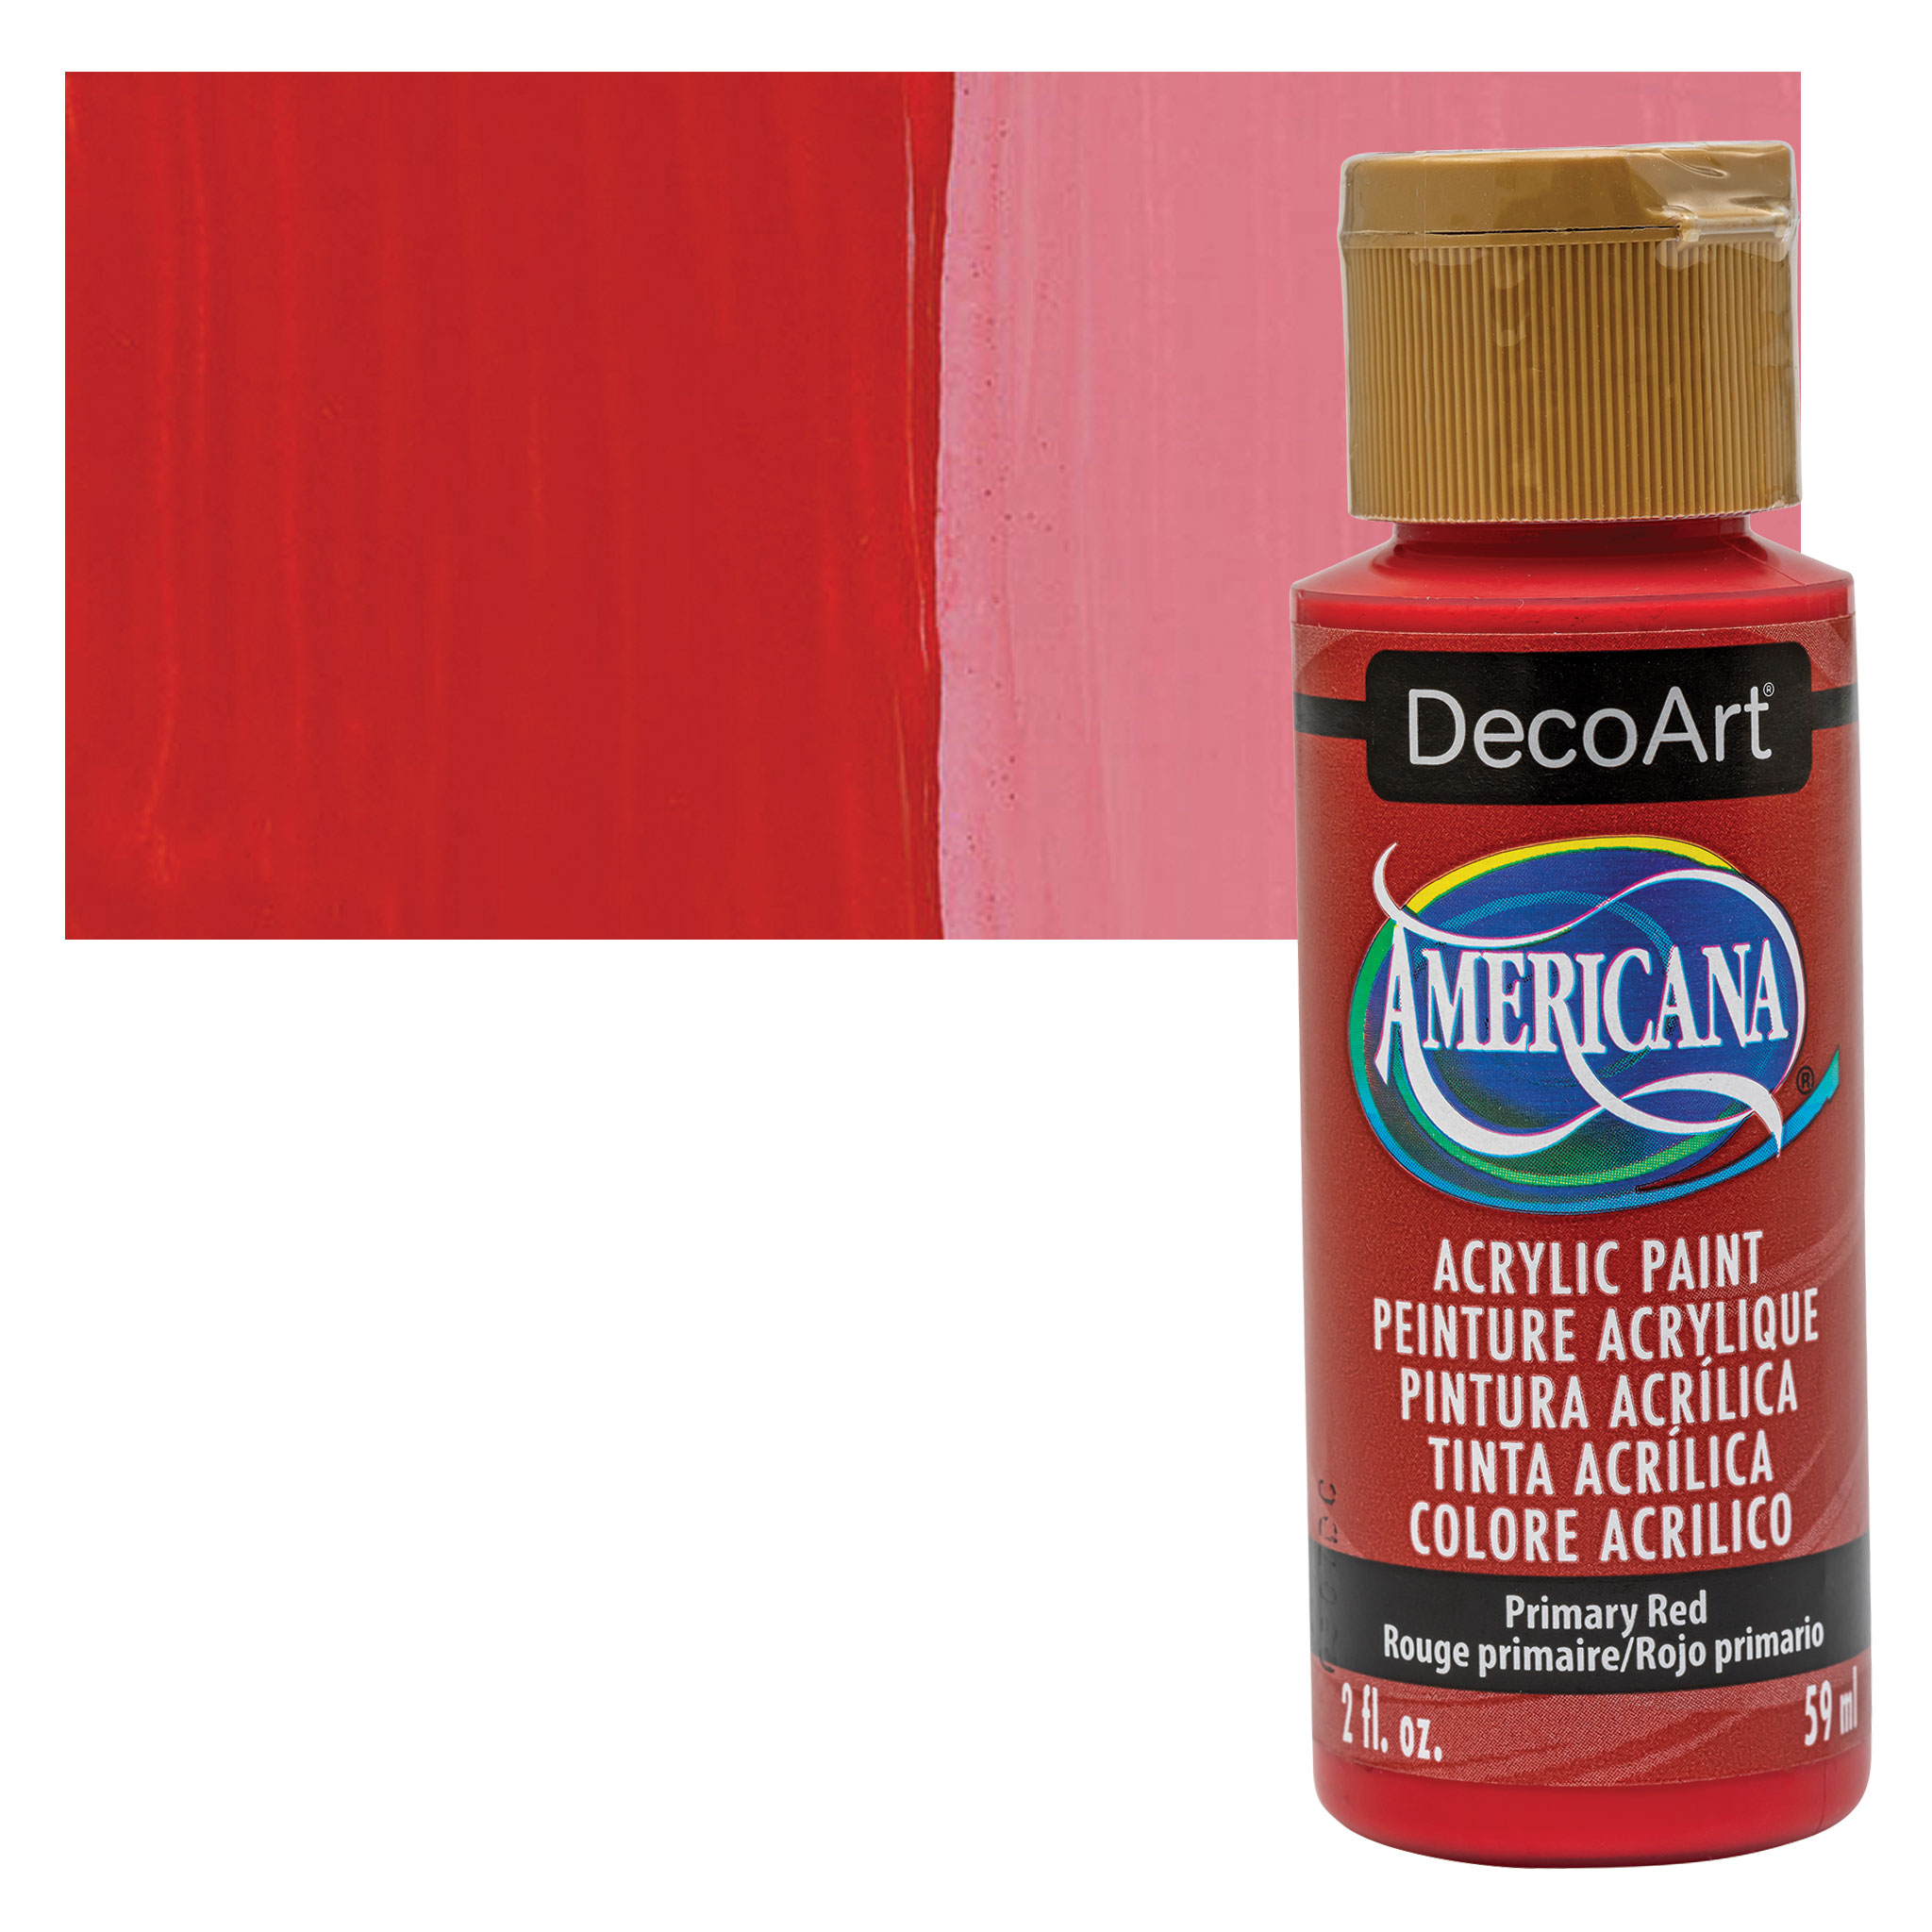 DecoArt Americana 2 oz. Primary Red Acrylic Paint DA199-3 - The Home Depot